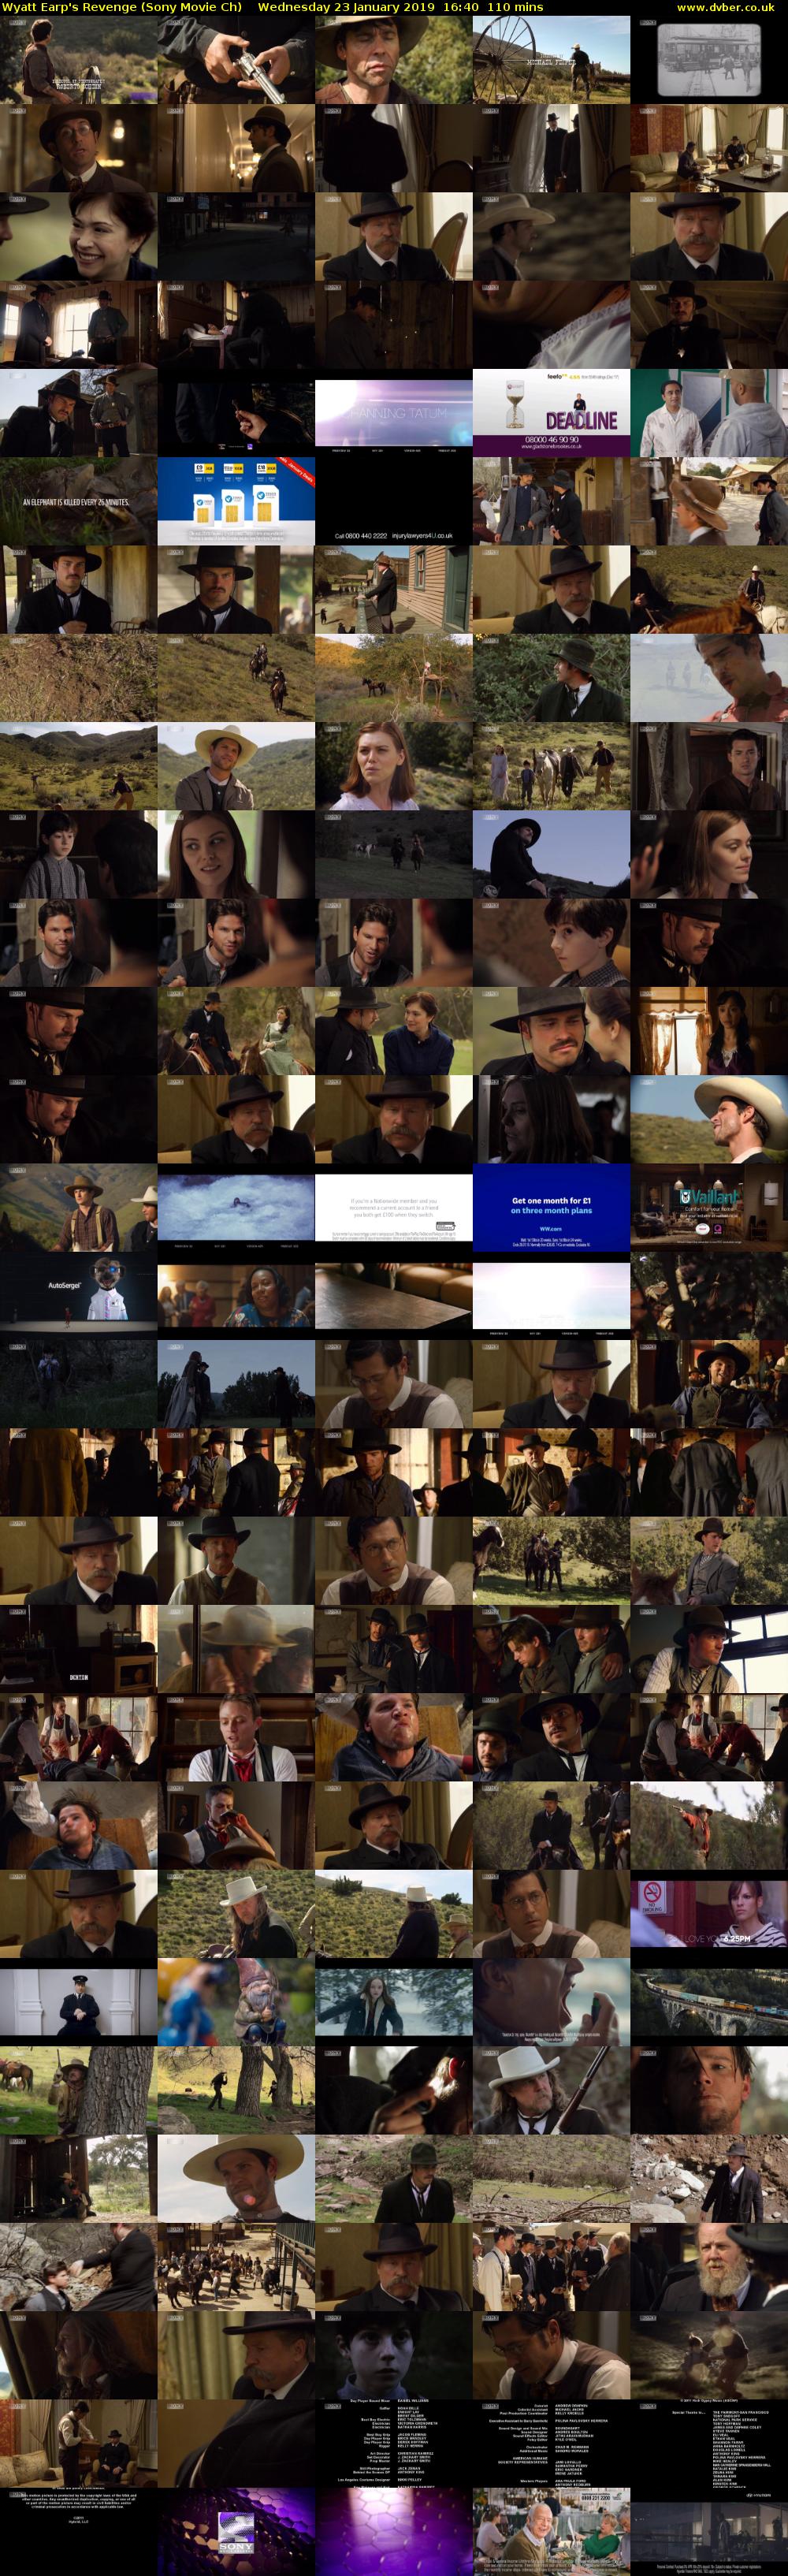 Wyatt Earp's Revenge (Sony Movie Ch) Wednesday 23 January 2019 16:40 - 18:30